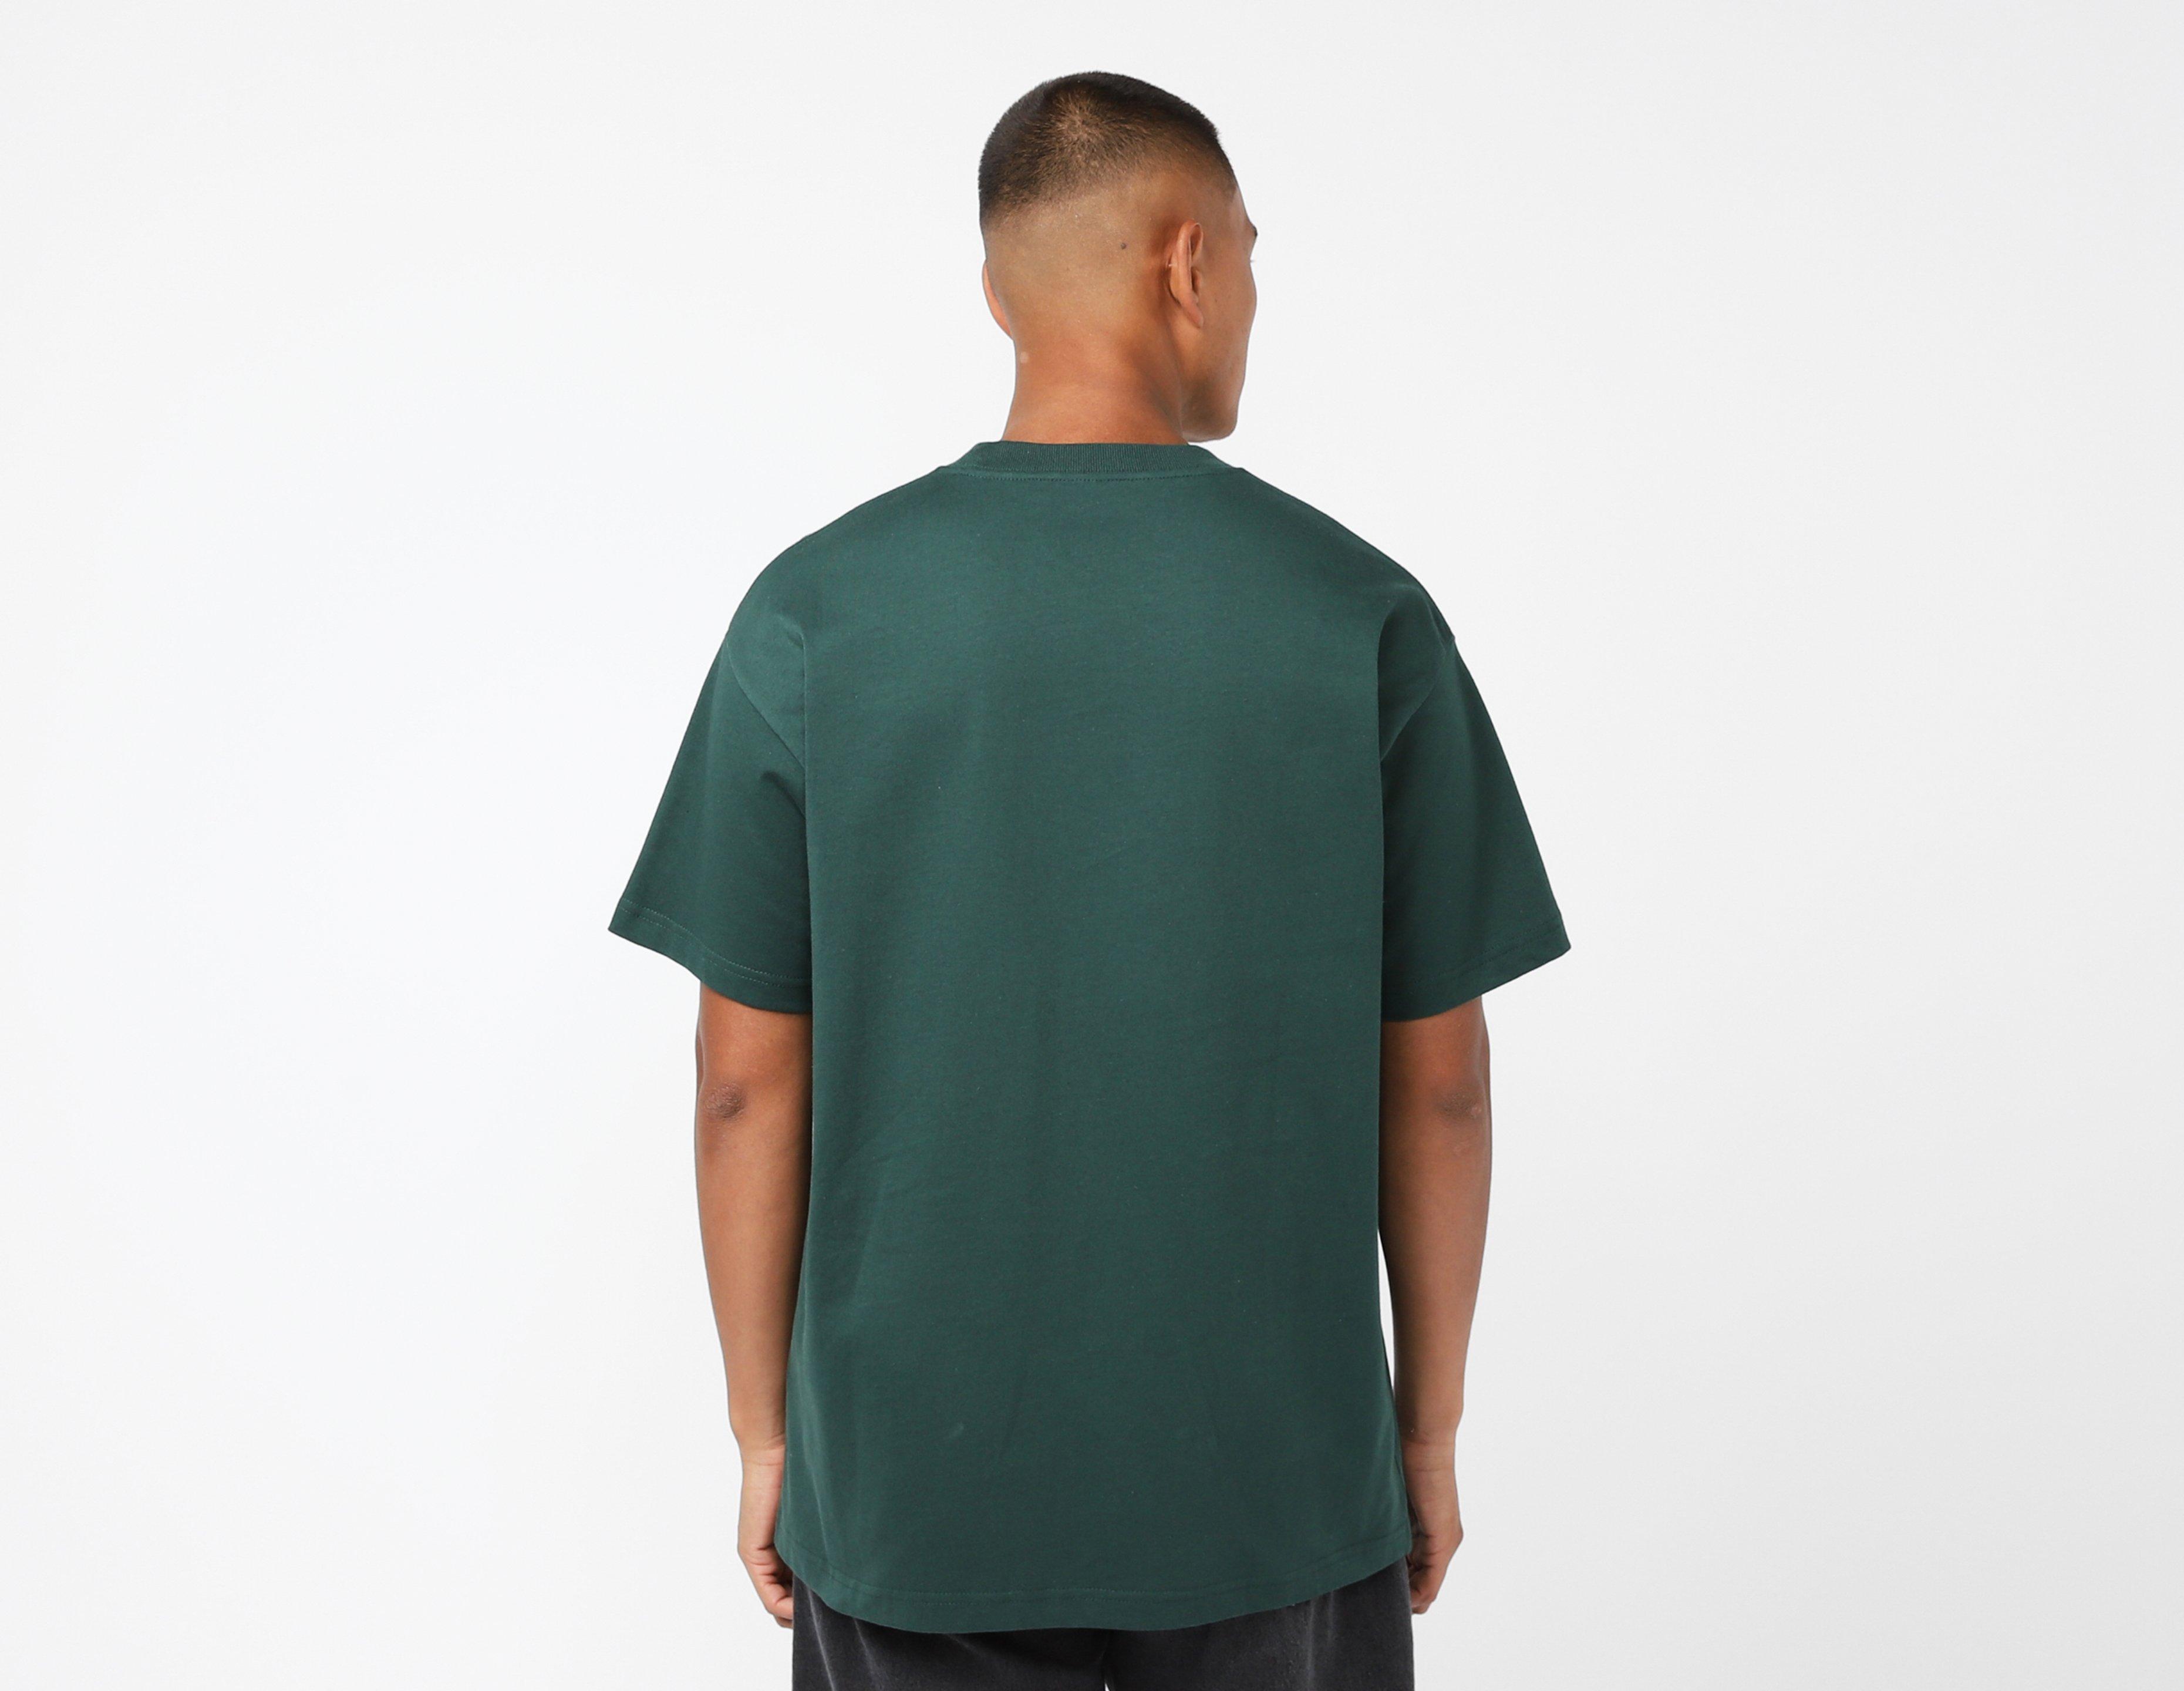 tommy hilfiger drawstring hoodie - Green Carhartt WIP Bubbles T |  Healthdesign? - Shirt Ralph